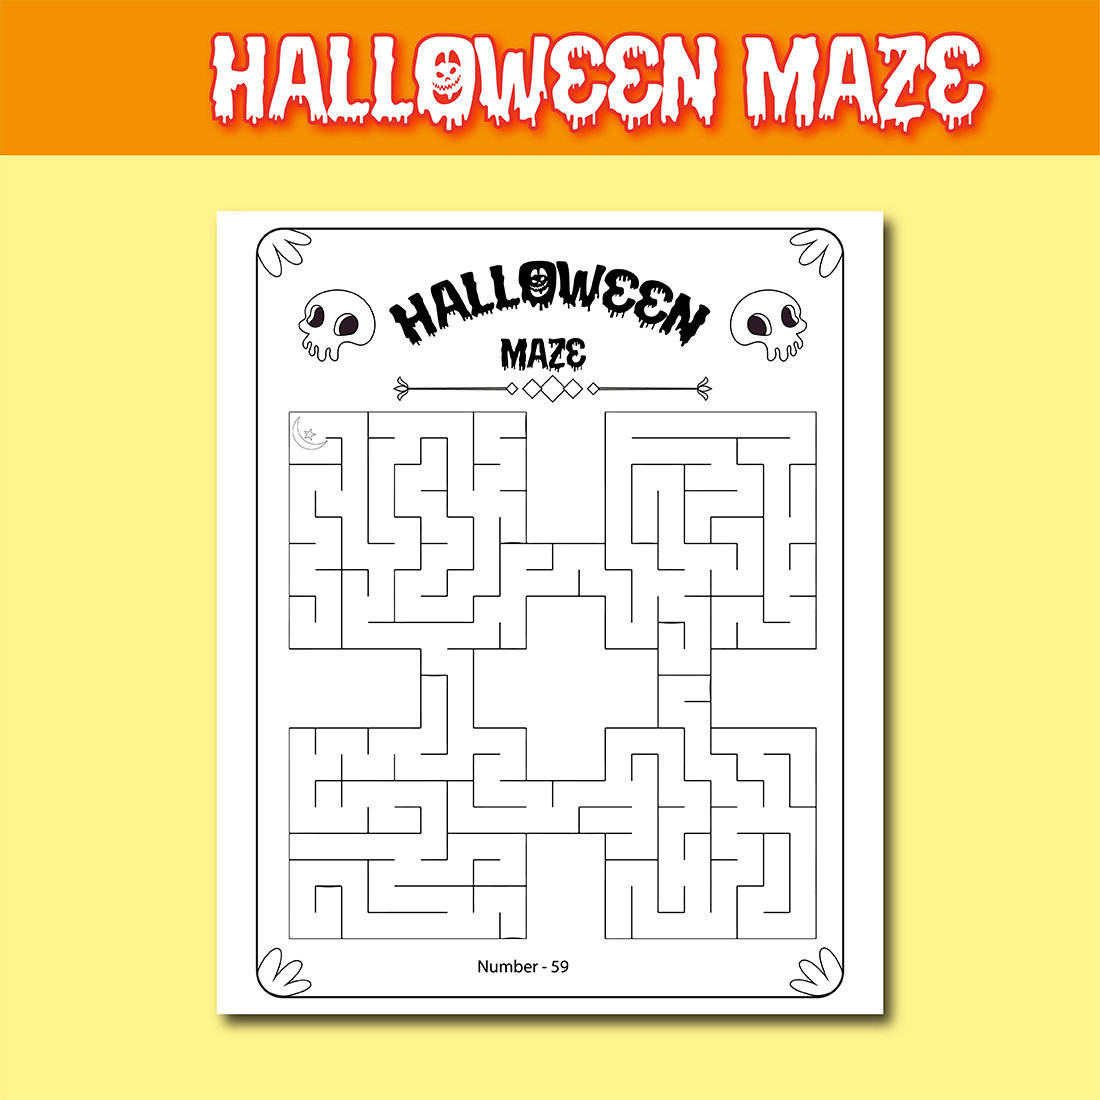 Halloween Mazes Activity Book For Kids Example.